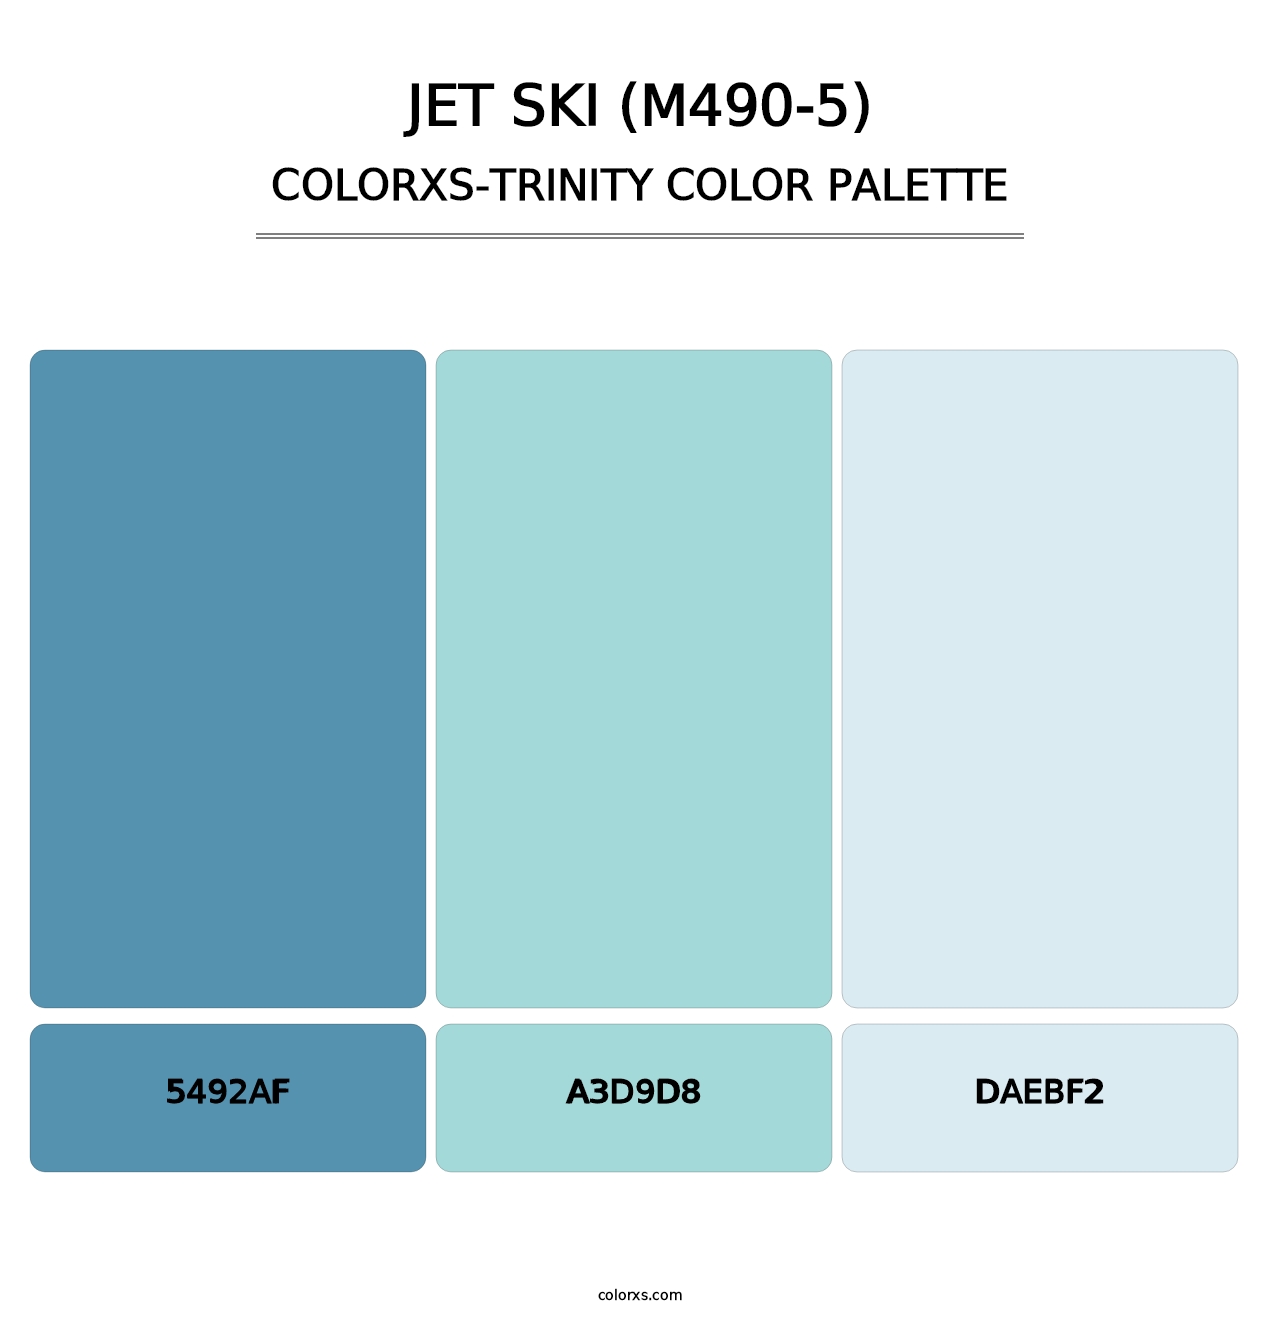 Jet Ski (M490-5) - Colorxs Trinity Palette